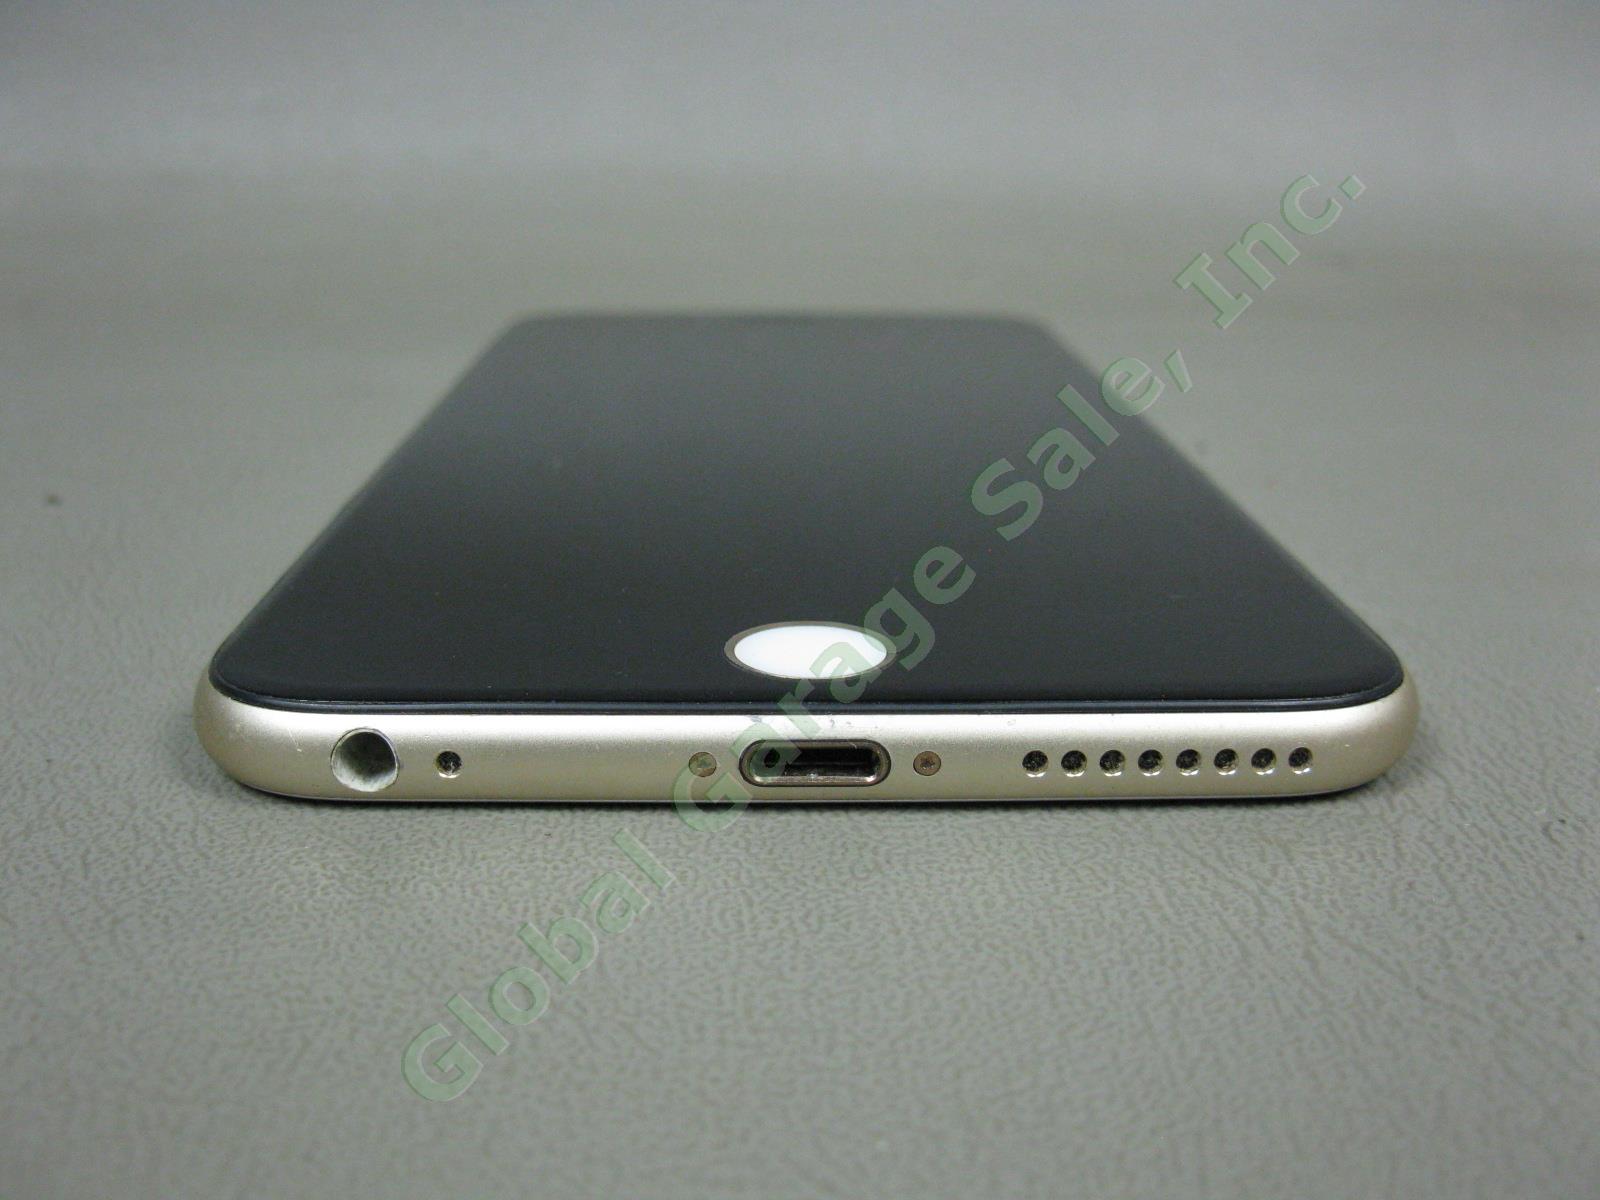 Apple iPhone 6 Plus Black 128GB A1522 MGCQ2LL/A Verizon Works Great No Reserve! 4